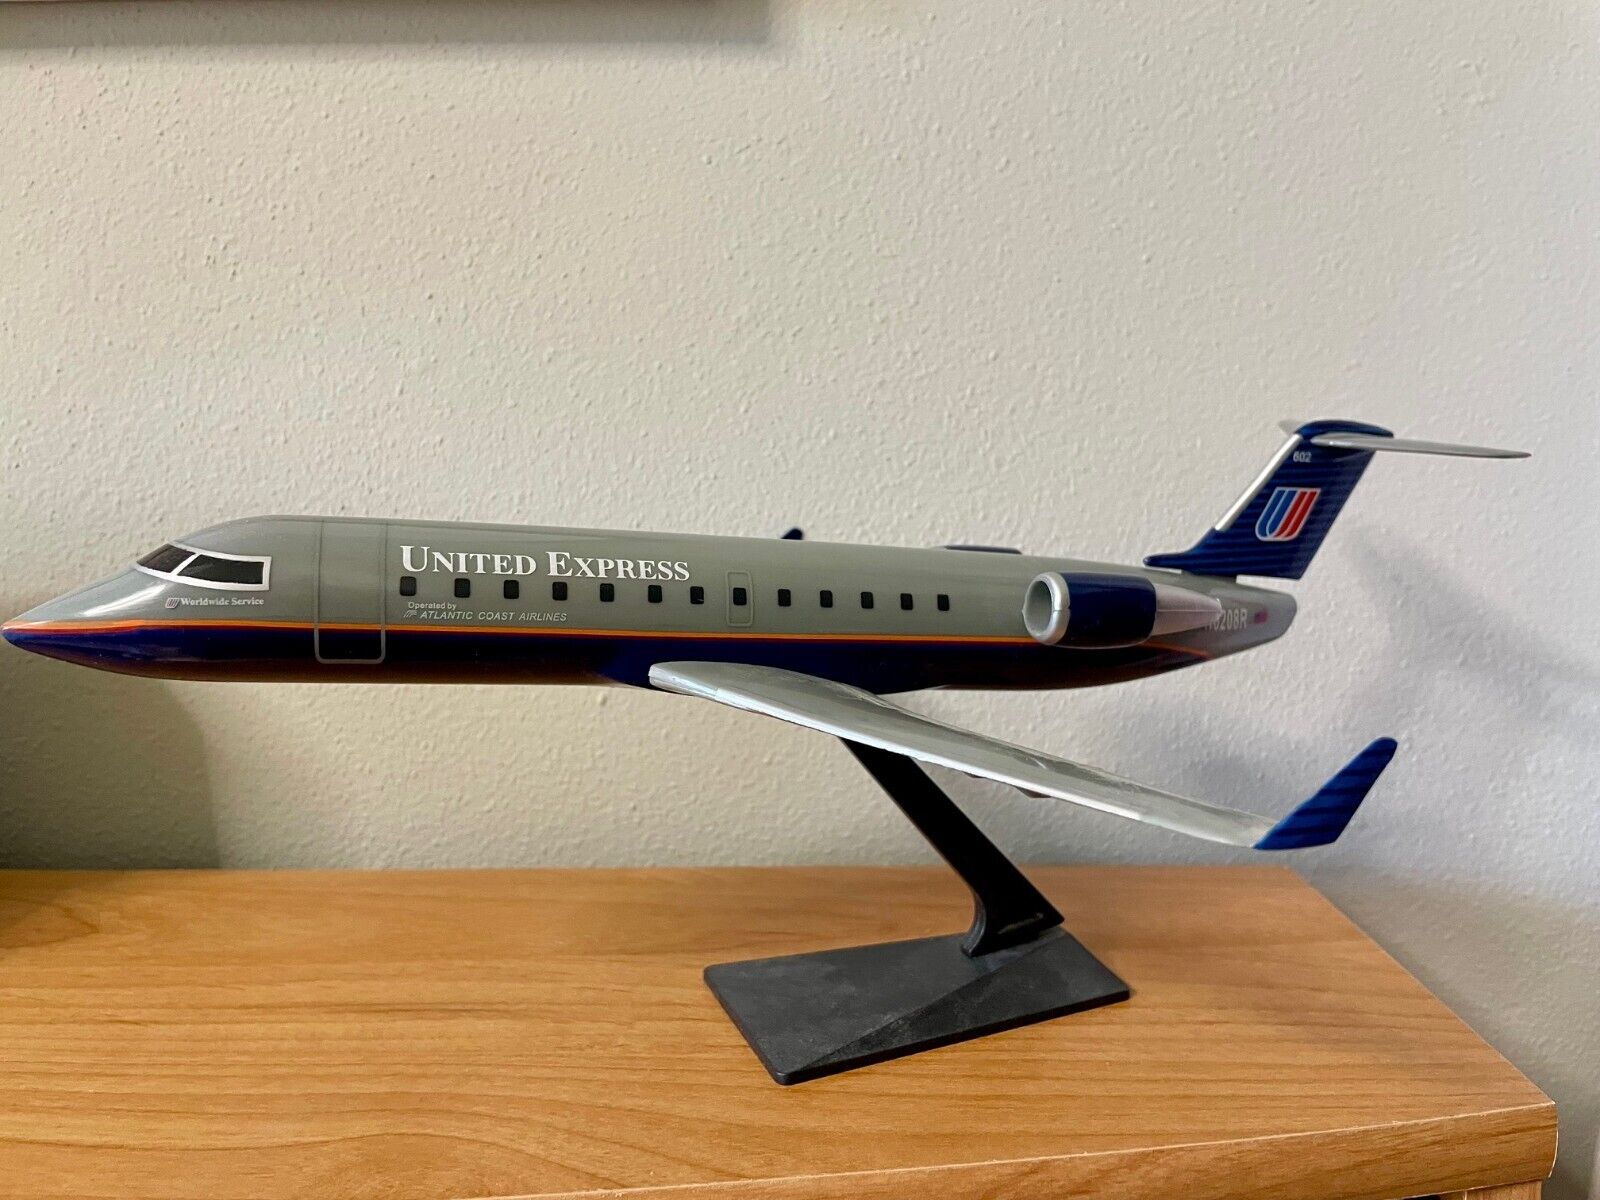 Flight Miniatures United Express Airplane model